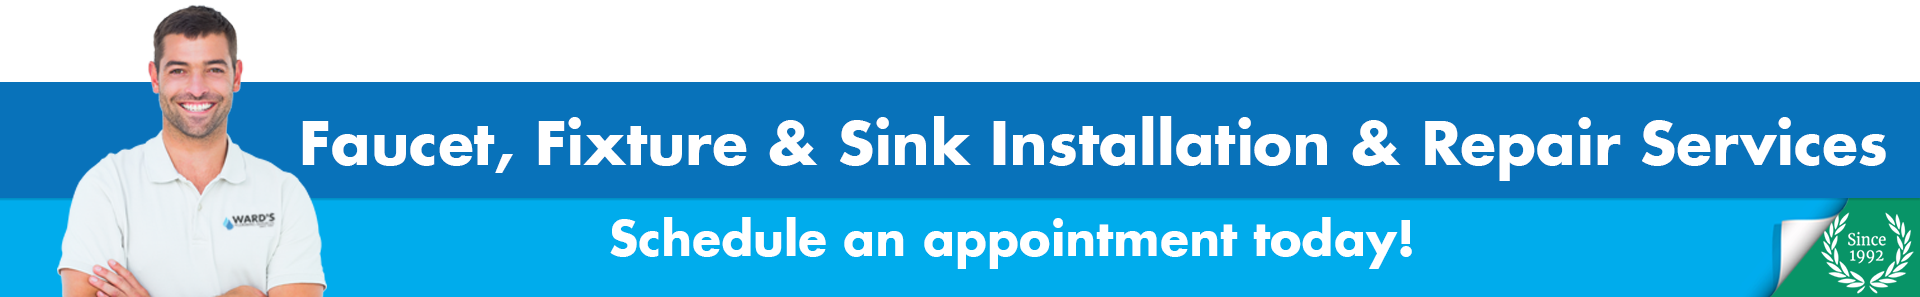 Faucet, Fixture & Sink Installation & Repair Services